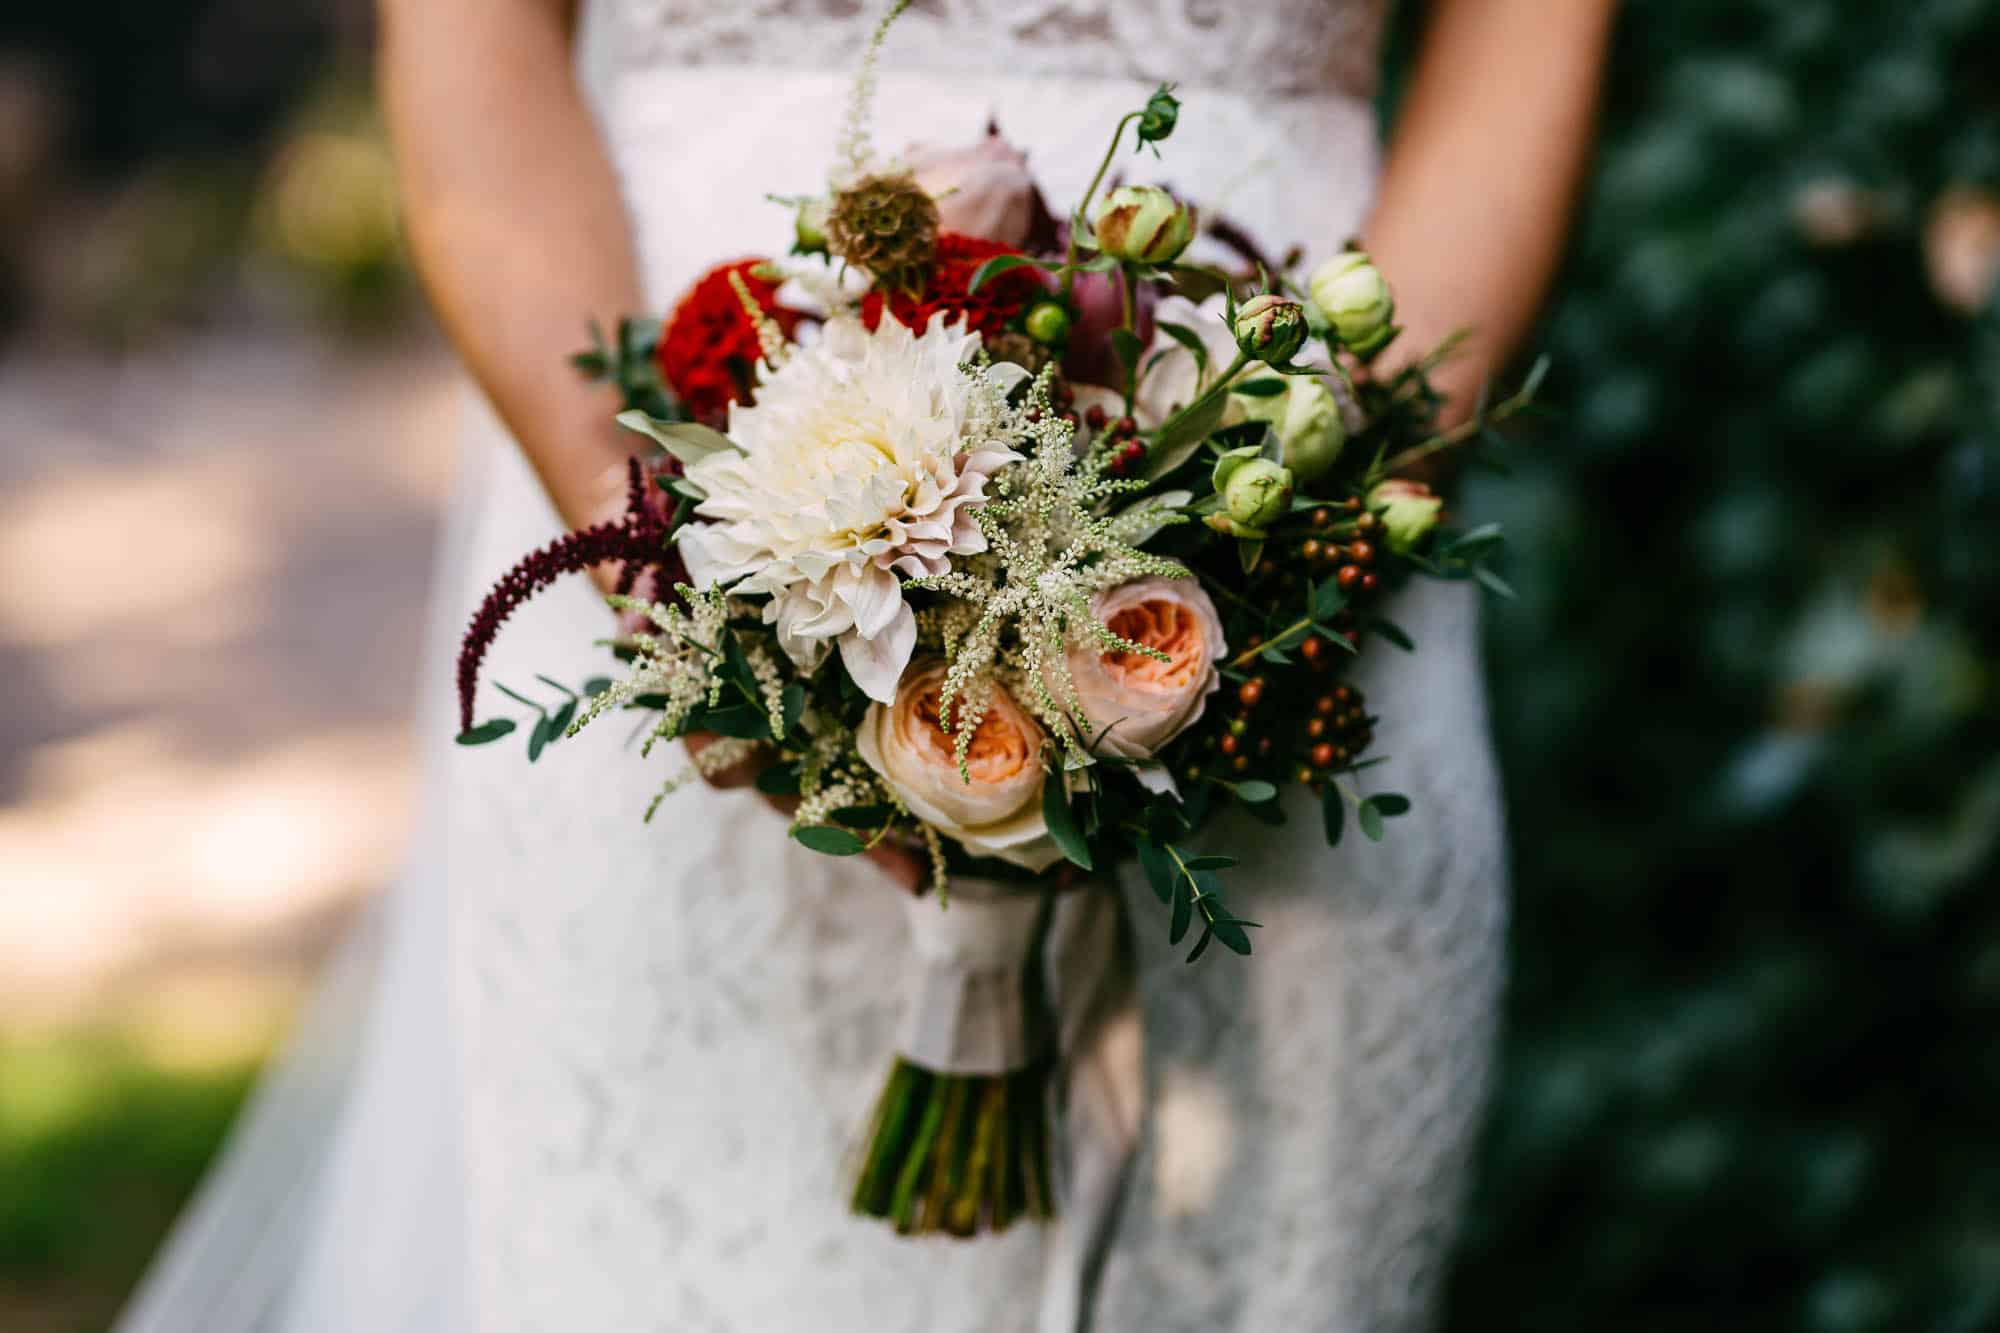 A bride with a wedding bouquet.